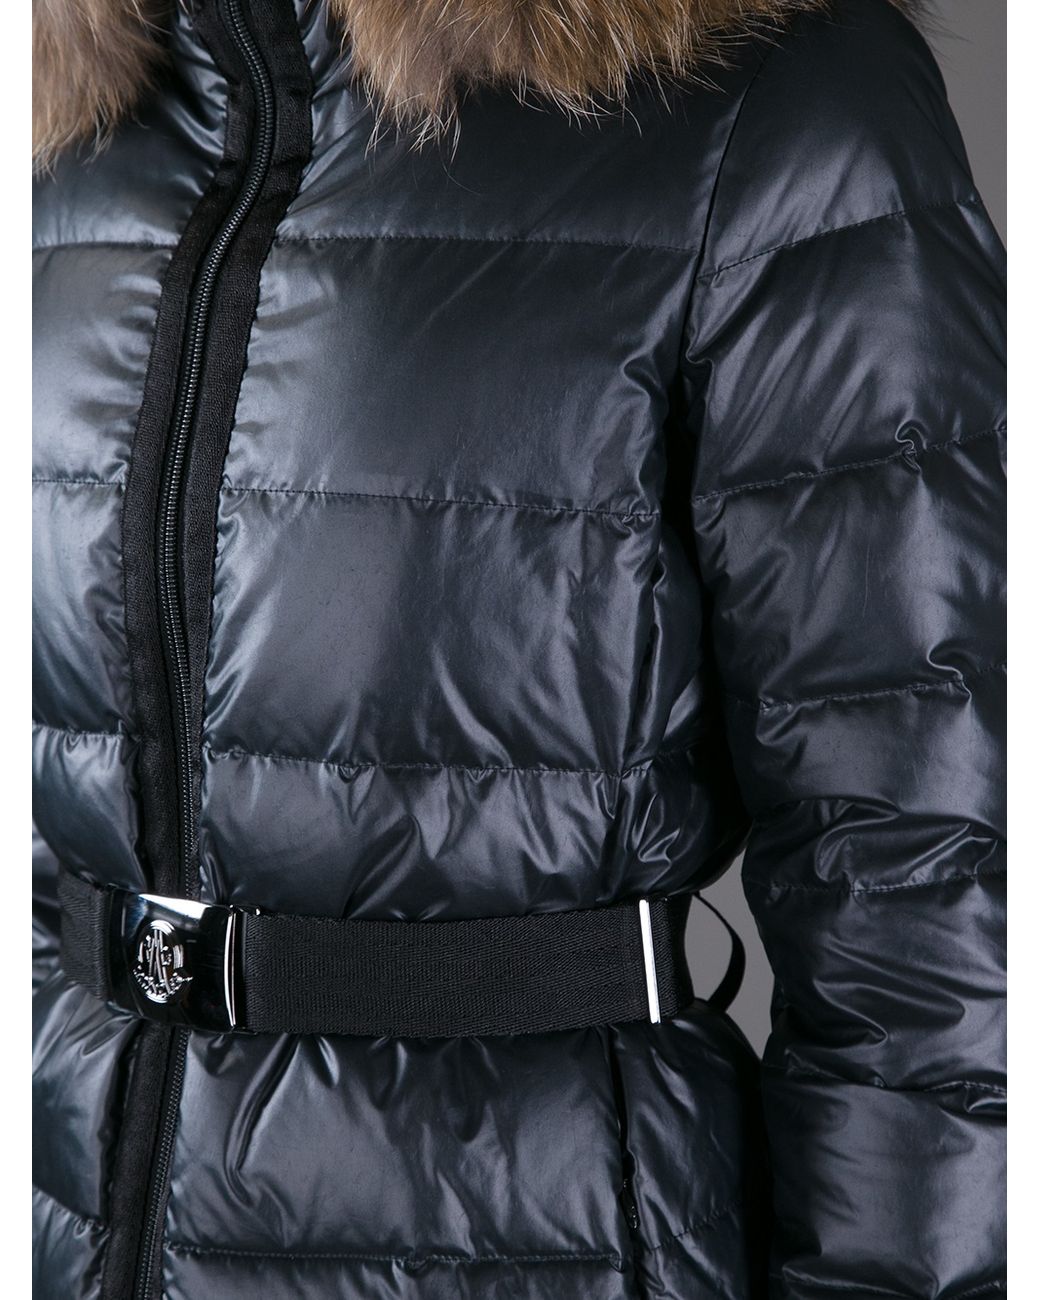 Moncler Nantes Fur Trim Coat in Black (Blue) | Lyst